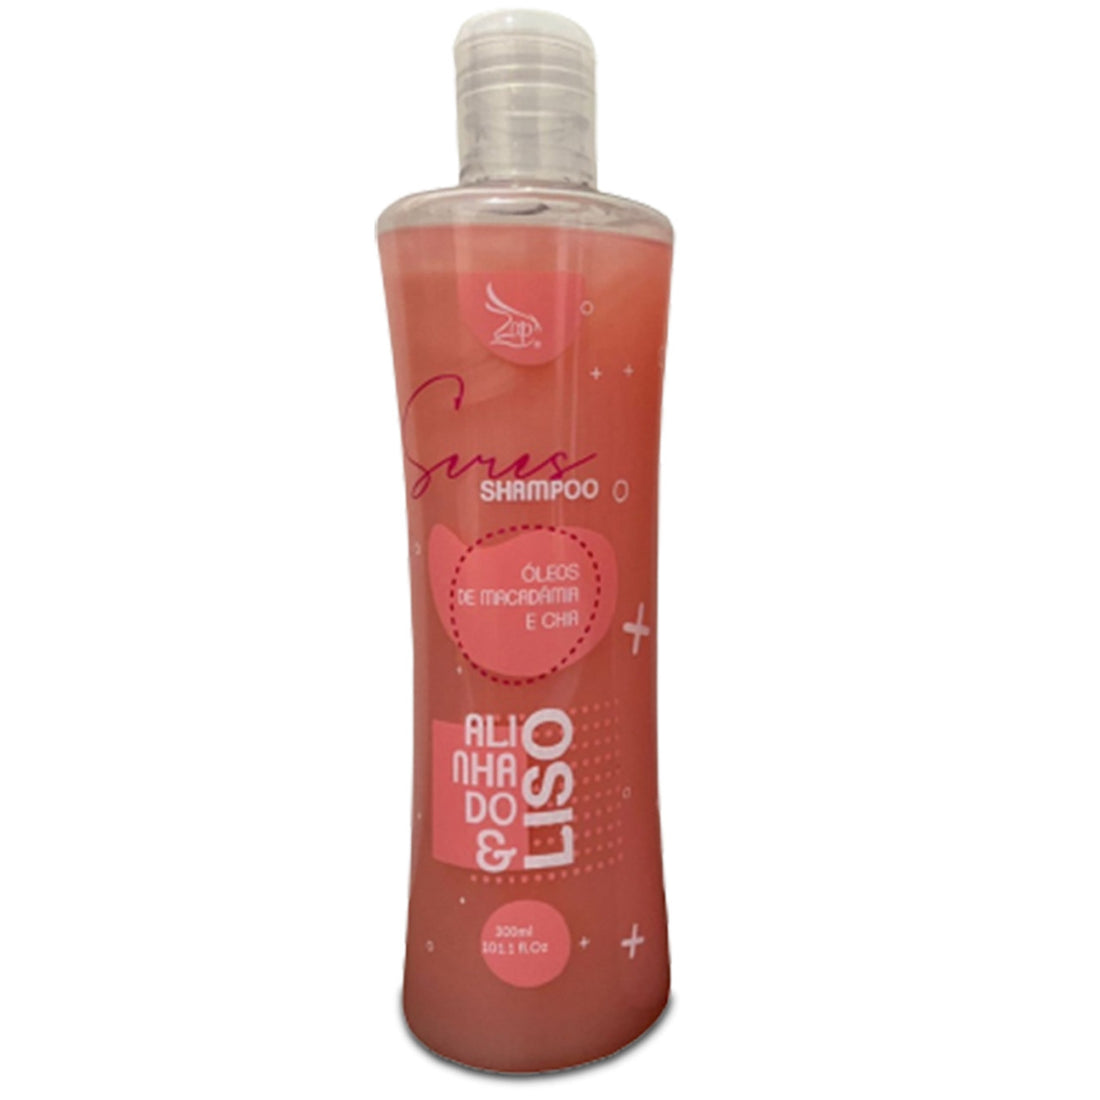 Zap, Alinhamentoliso, Deep Cleansing Shampoo For Hair, 300ml/ 10.14 fl.oz